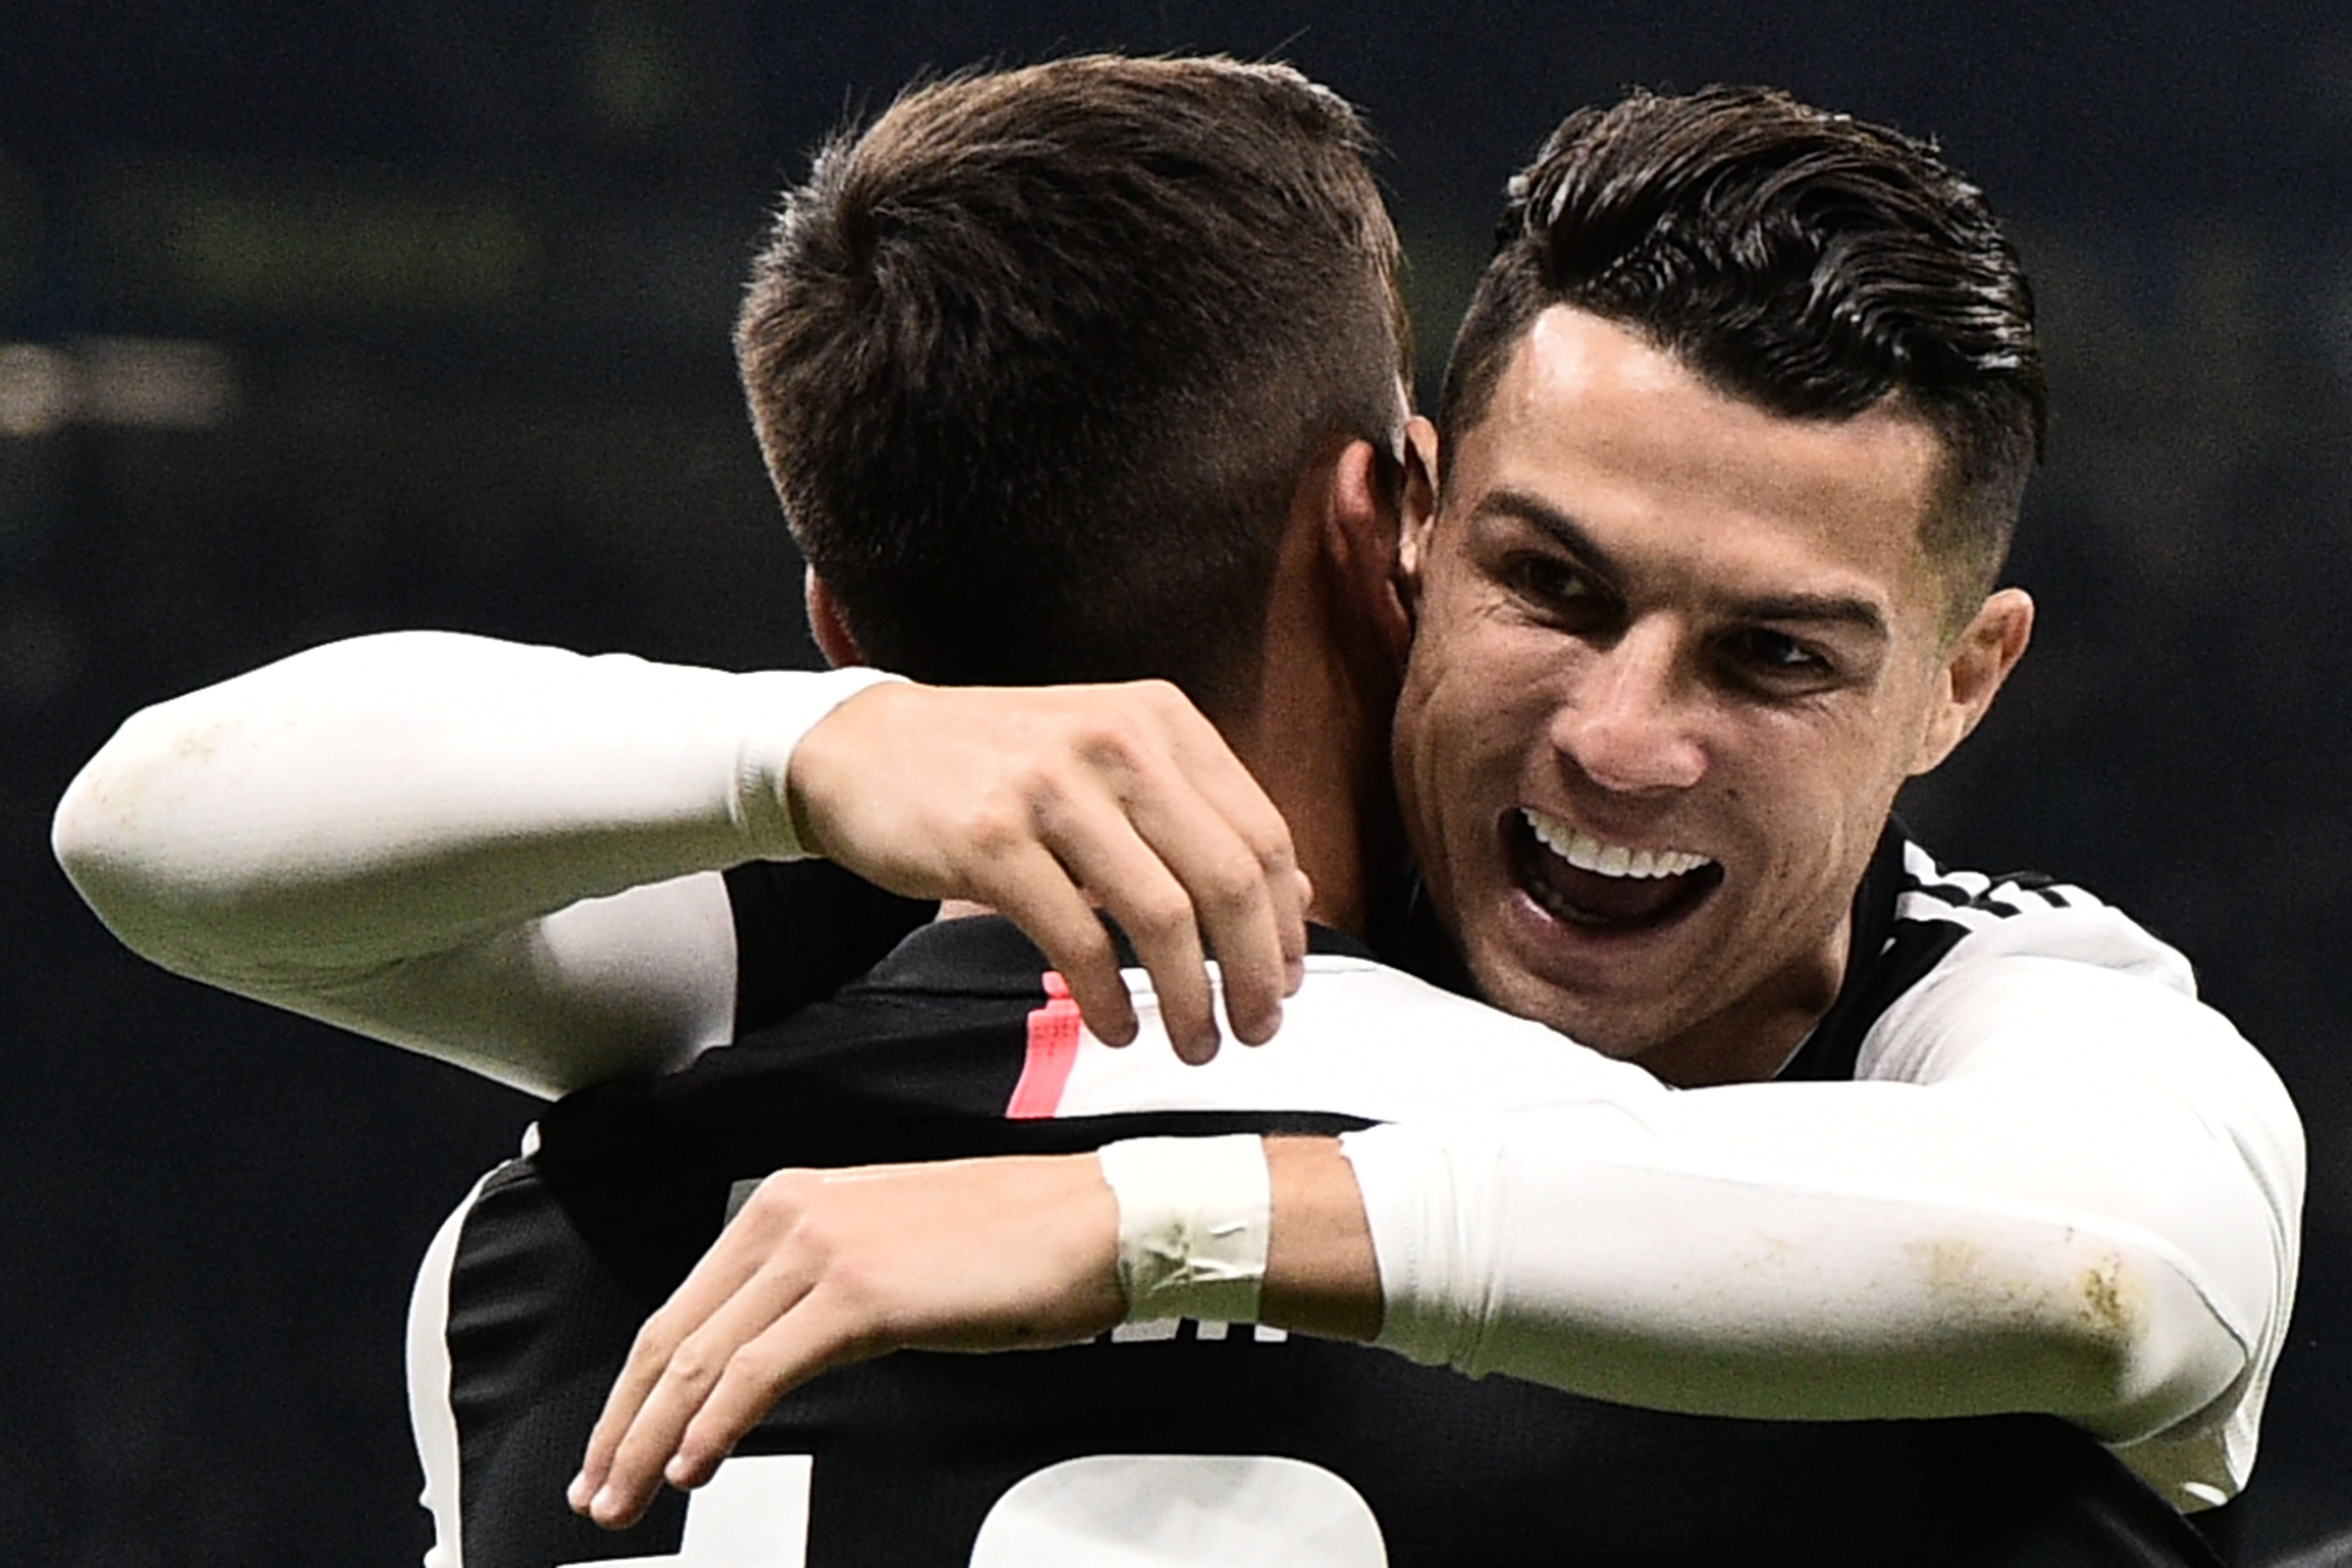  Video – Juventus recall past exploits against Bologna, featuring Ronaldo and Higuain